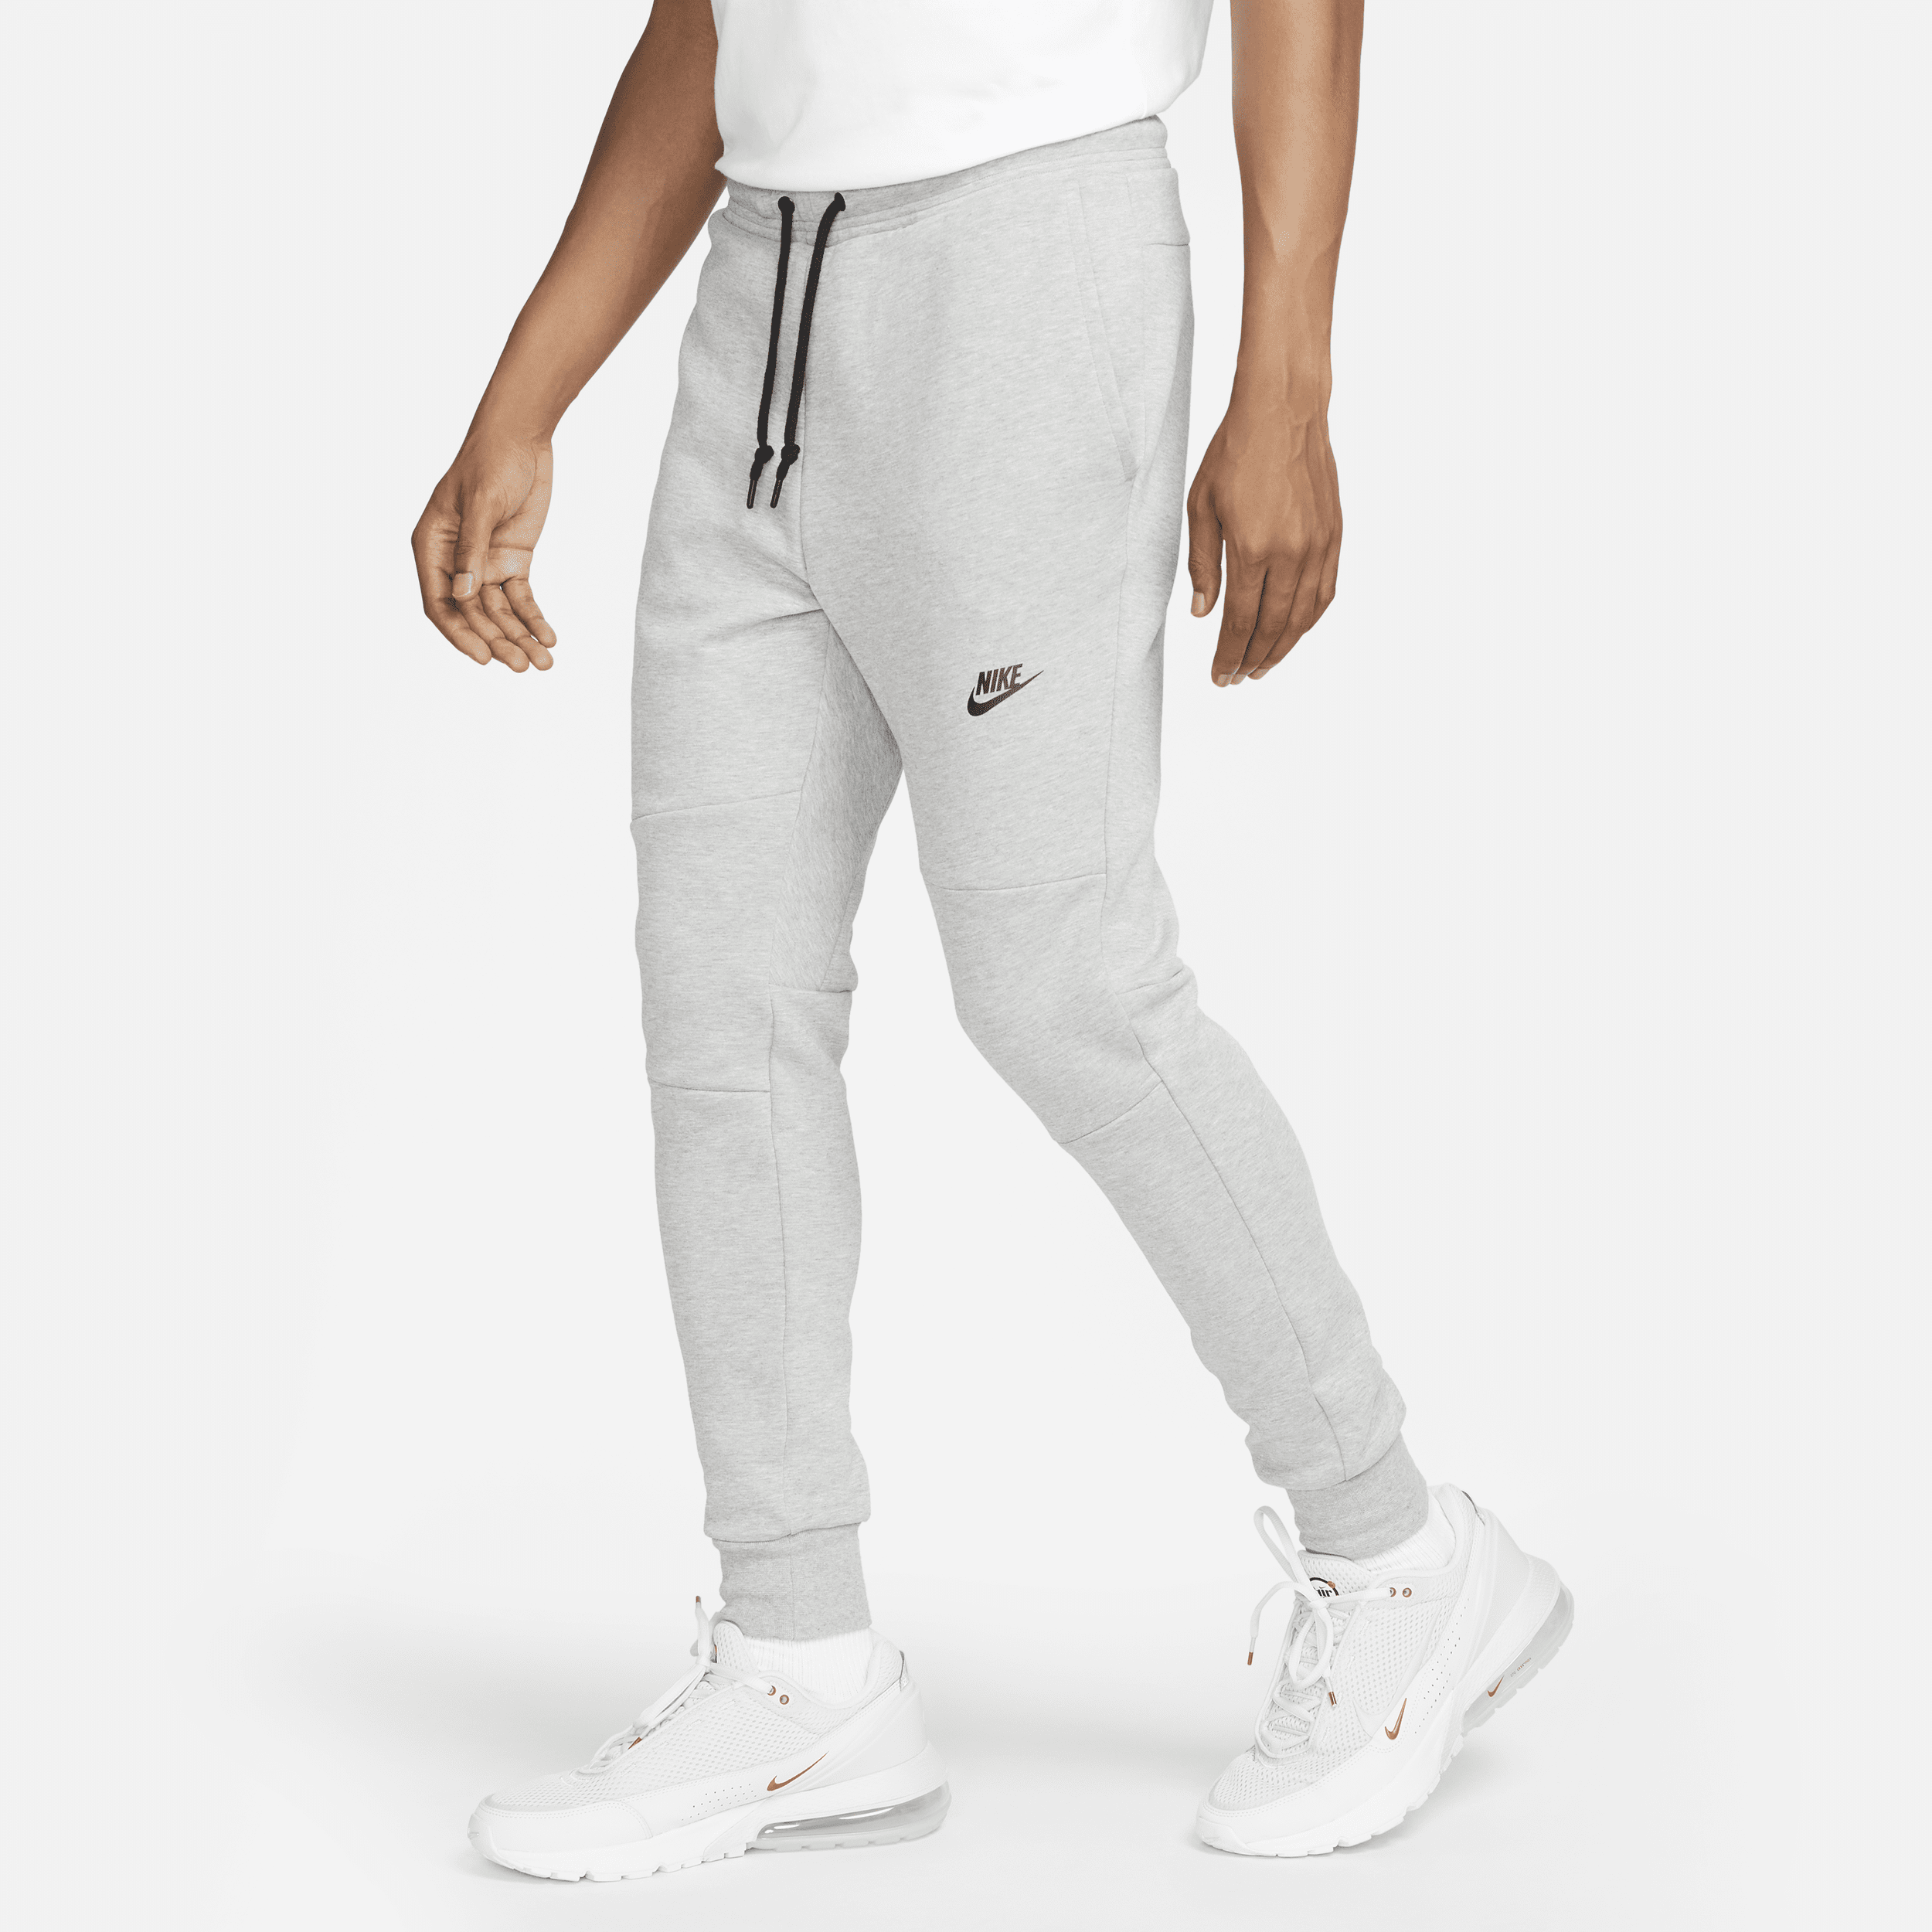 Men's Joggers & Sweatpants. Nike AU